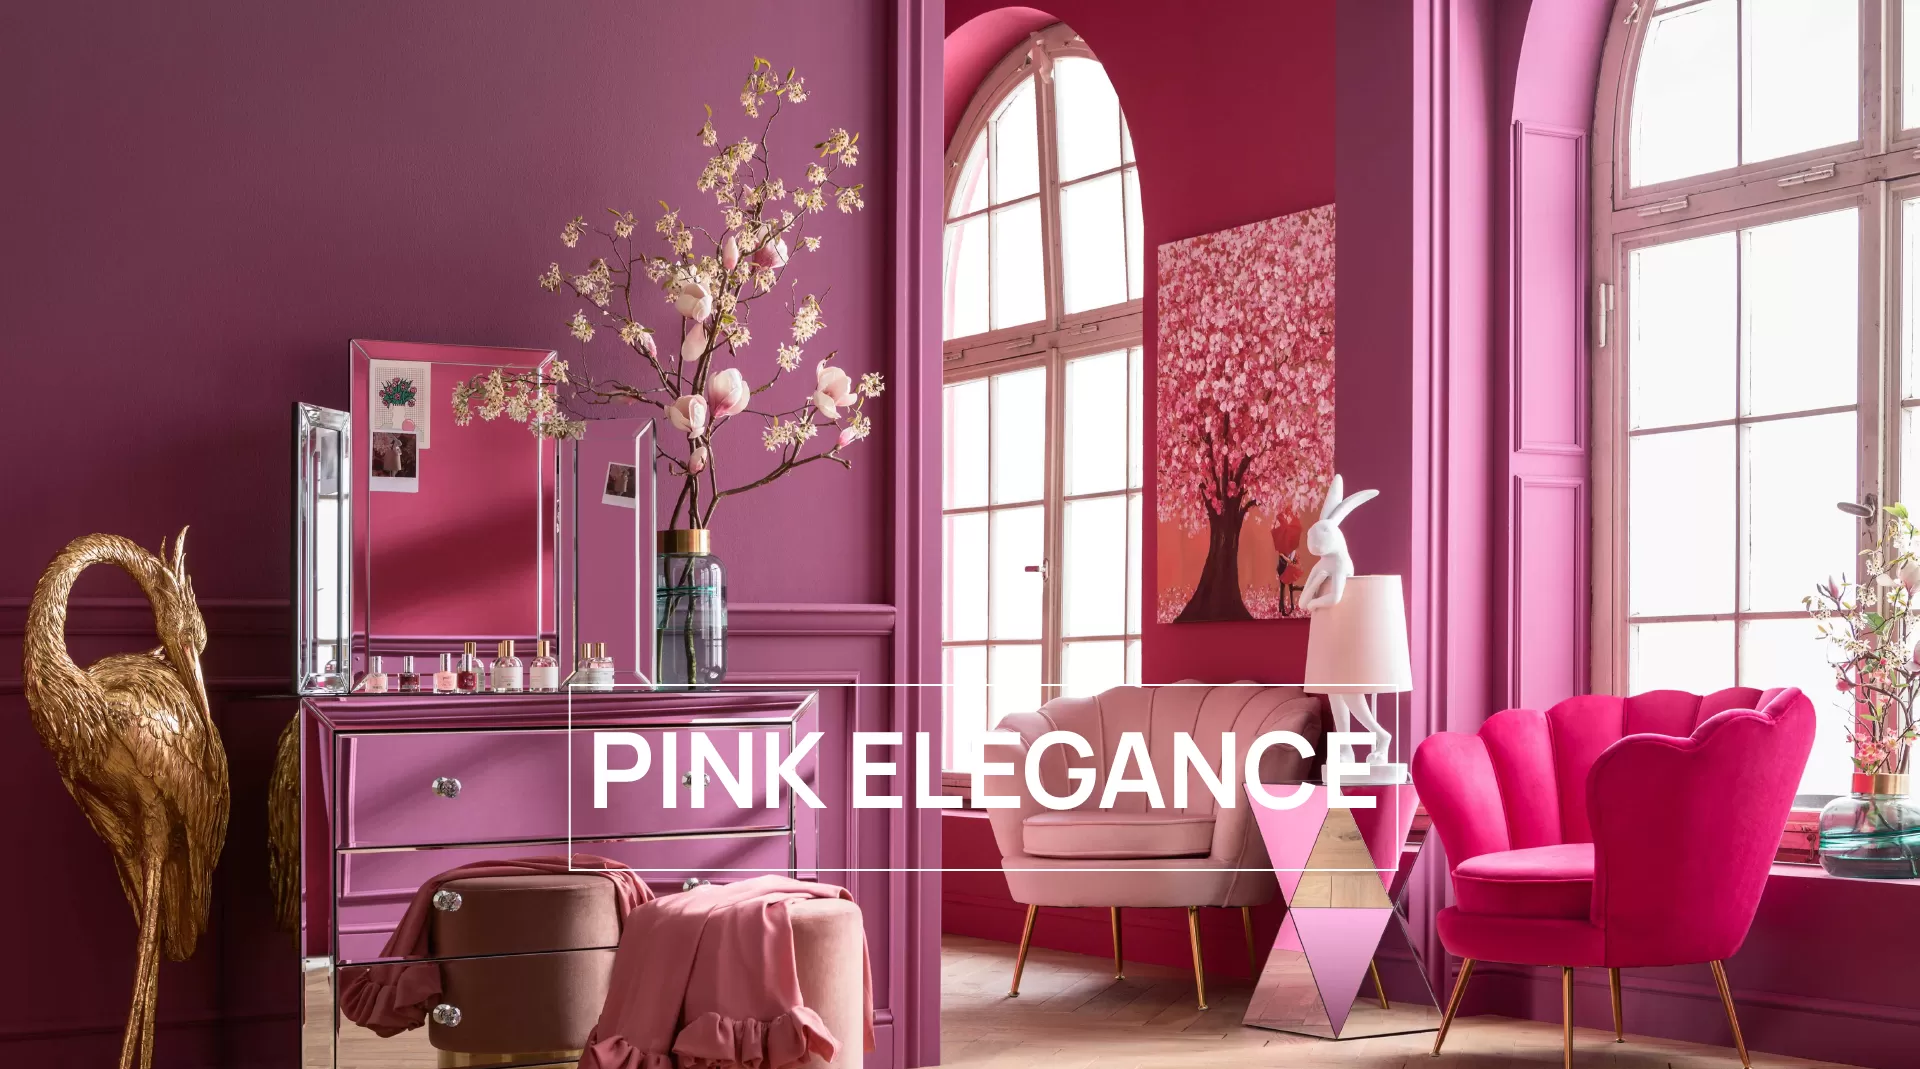 pink elegance decor